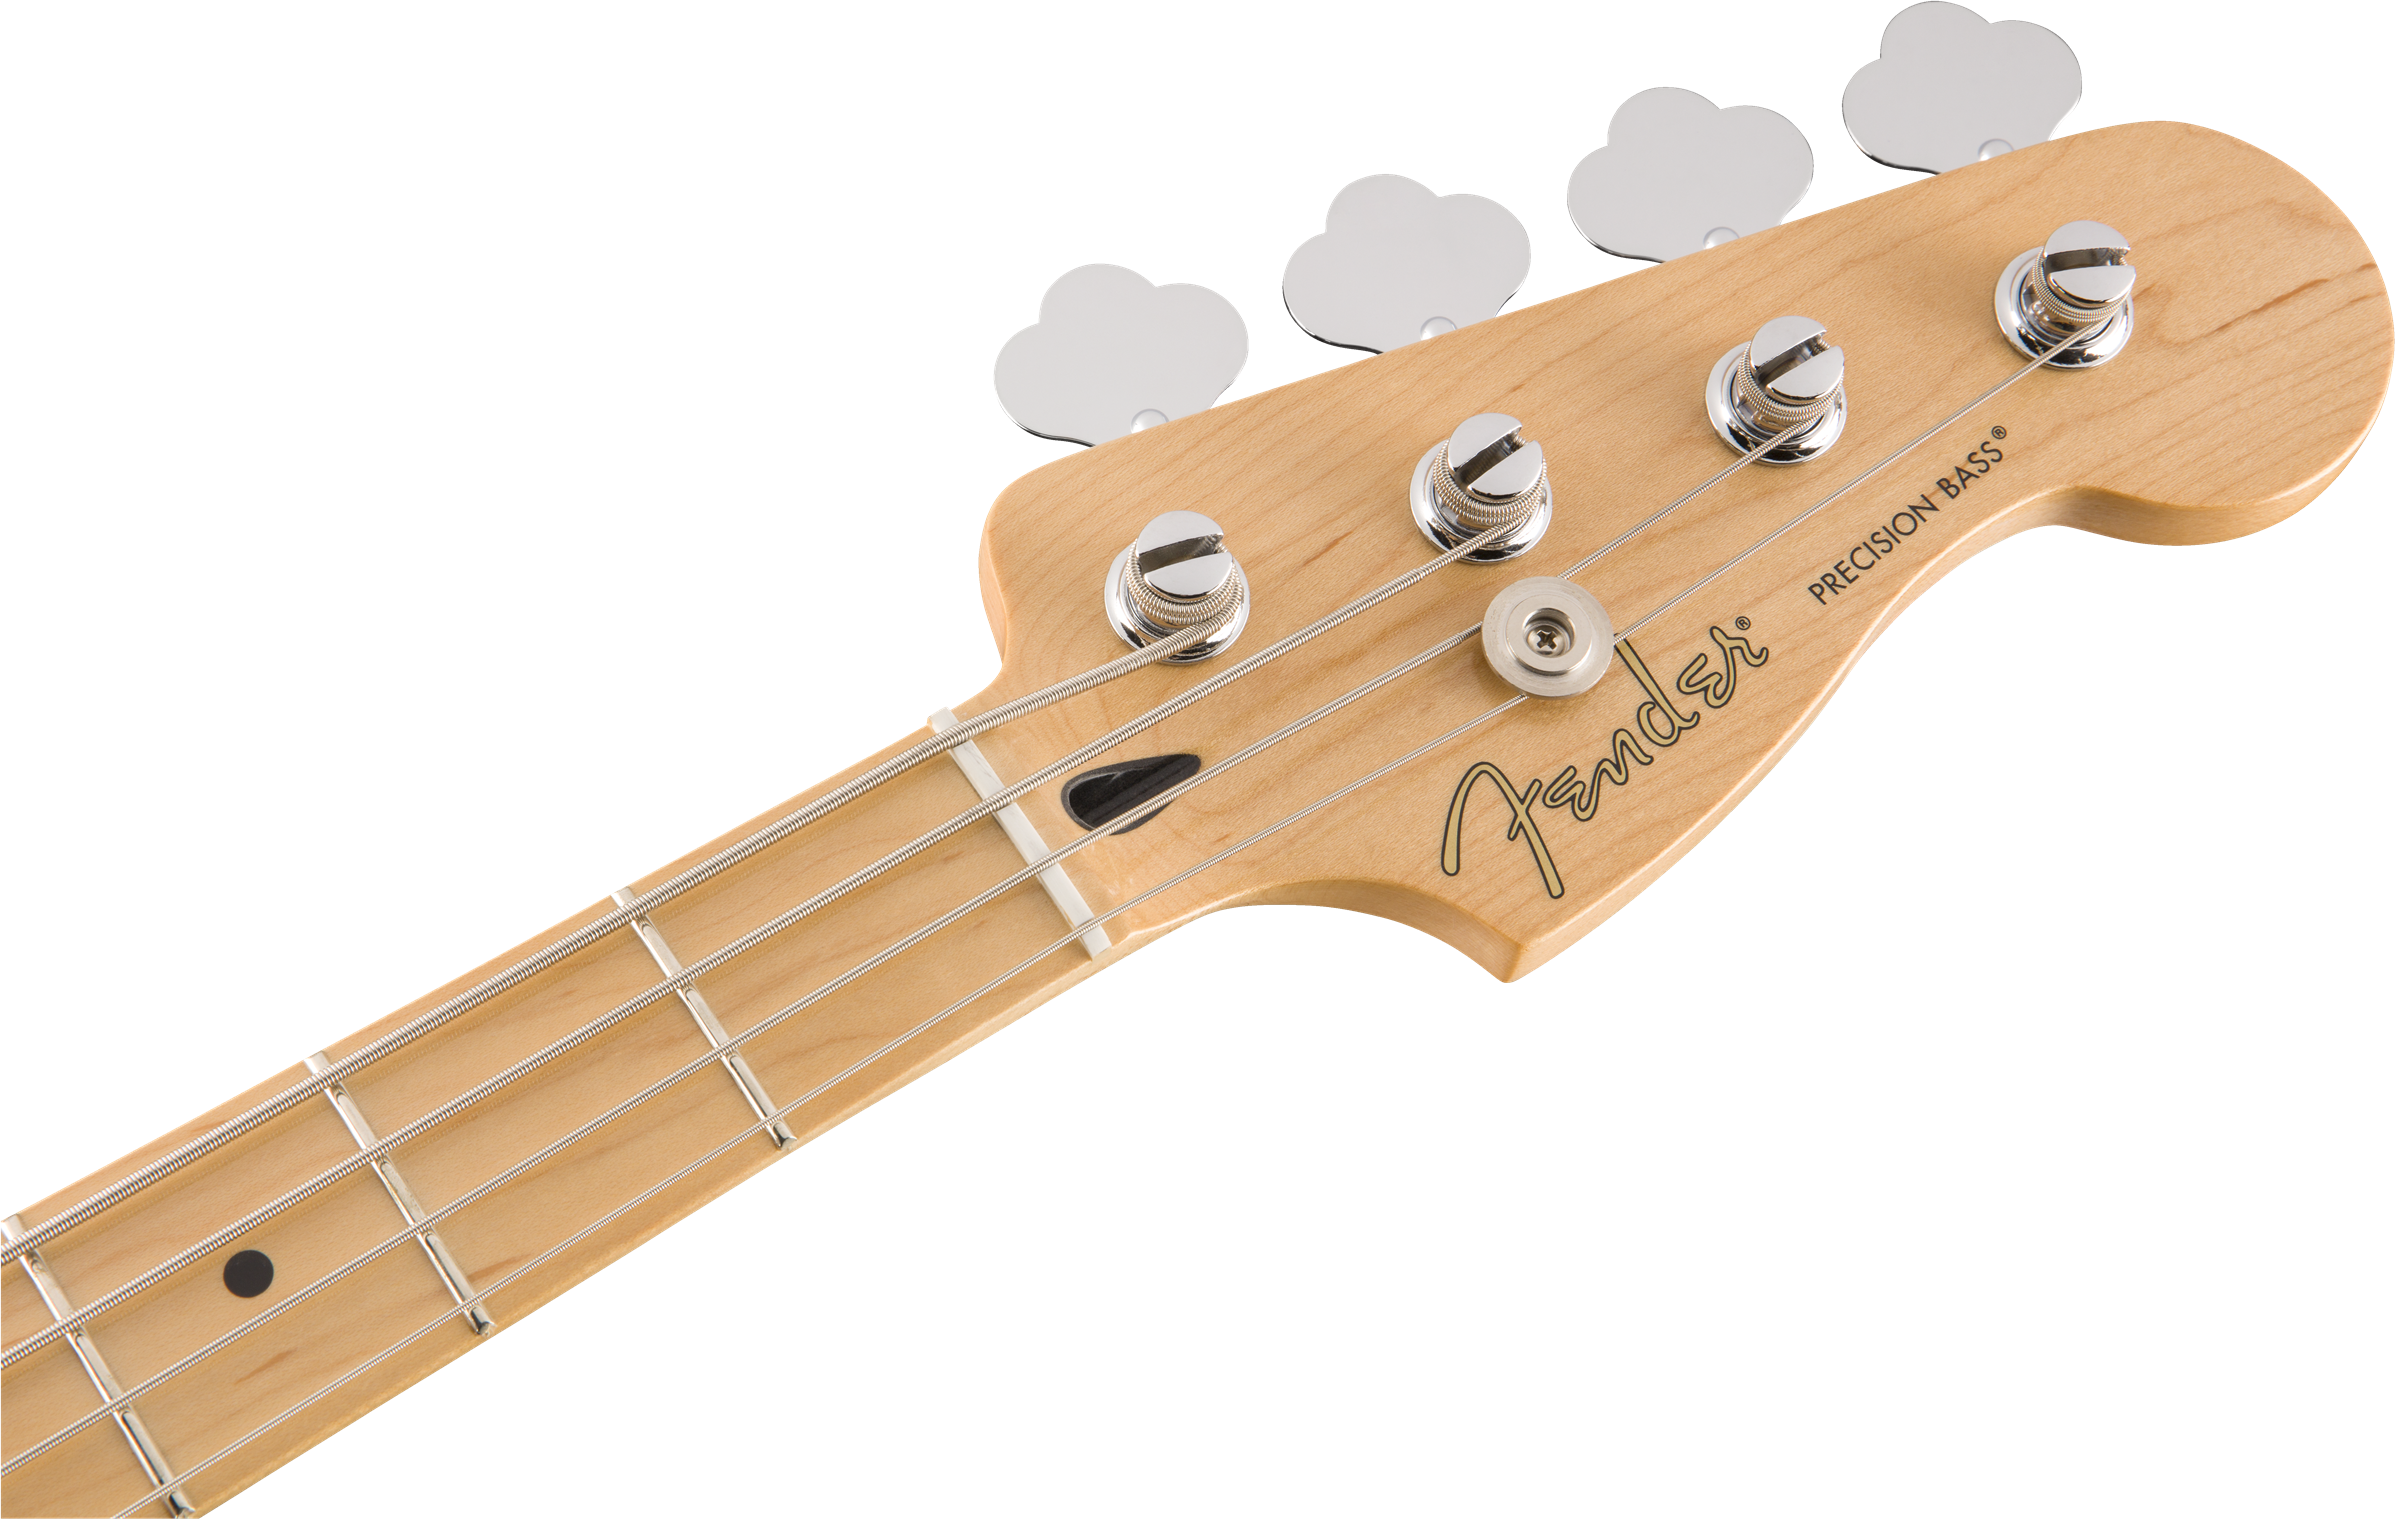 Fender Player Precision Bass, Maple Fingerboard, Buttercream 0149802534